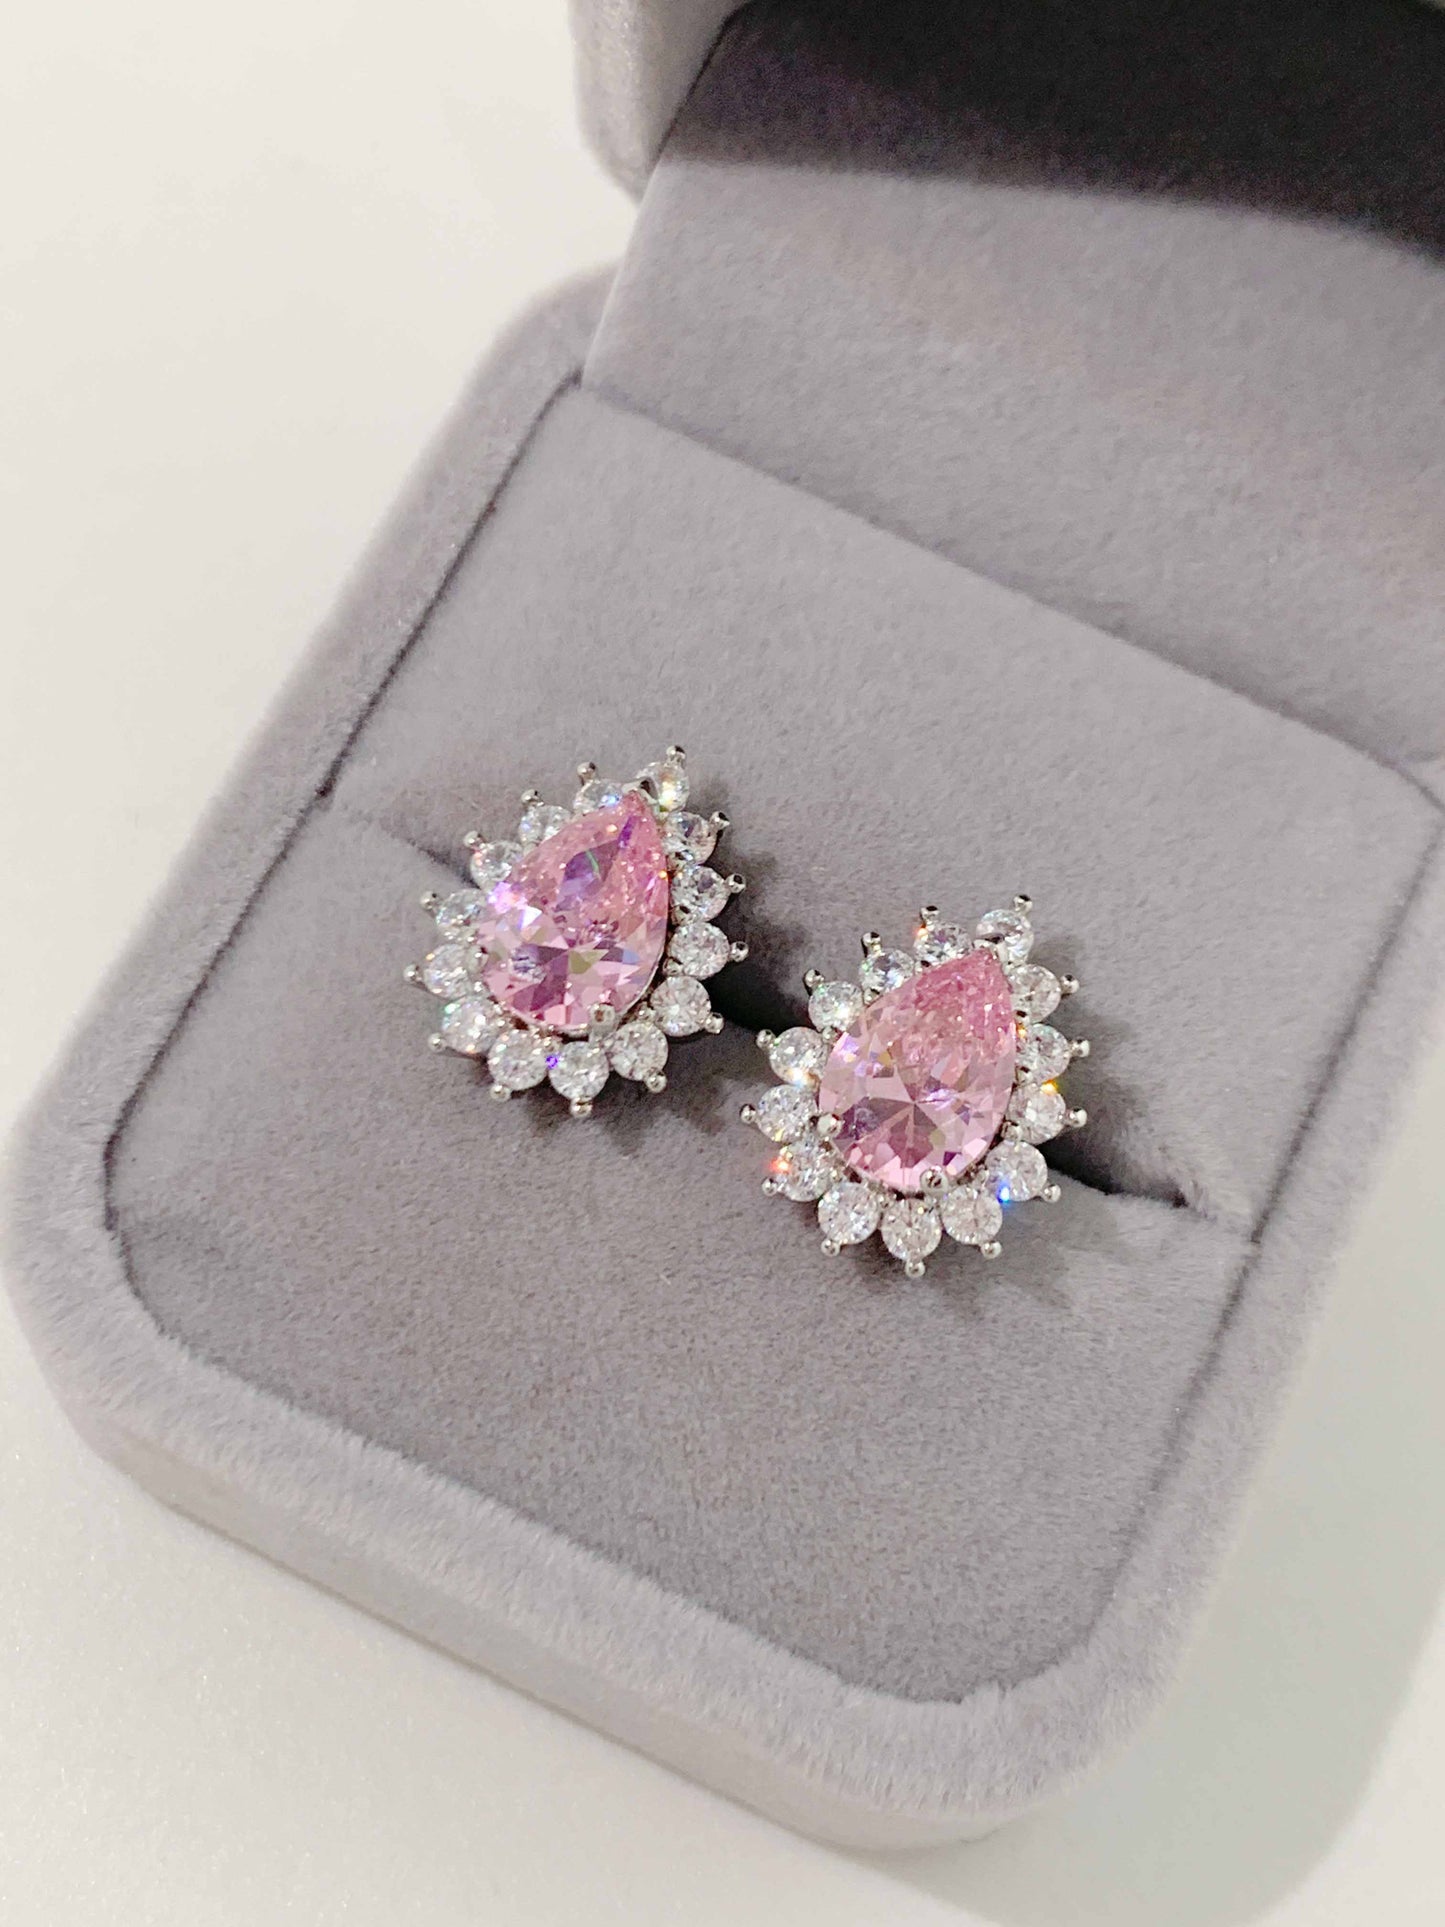 My Box Bijoux Pink - Set of 5 Created in China Jewelry